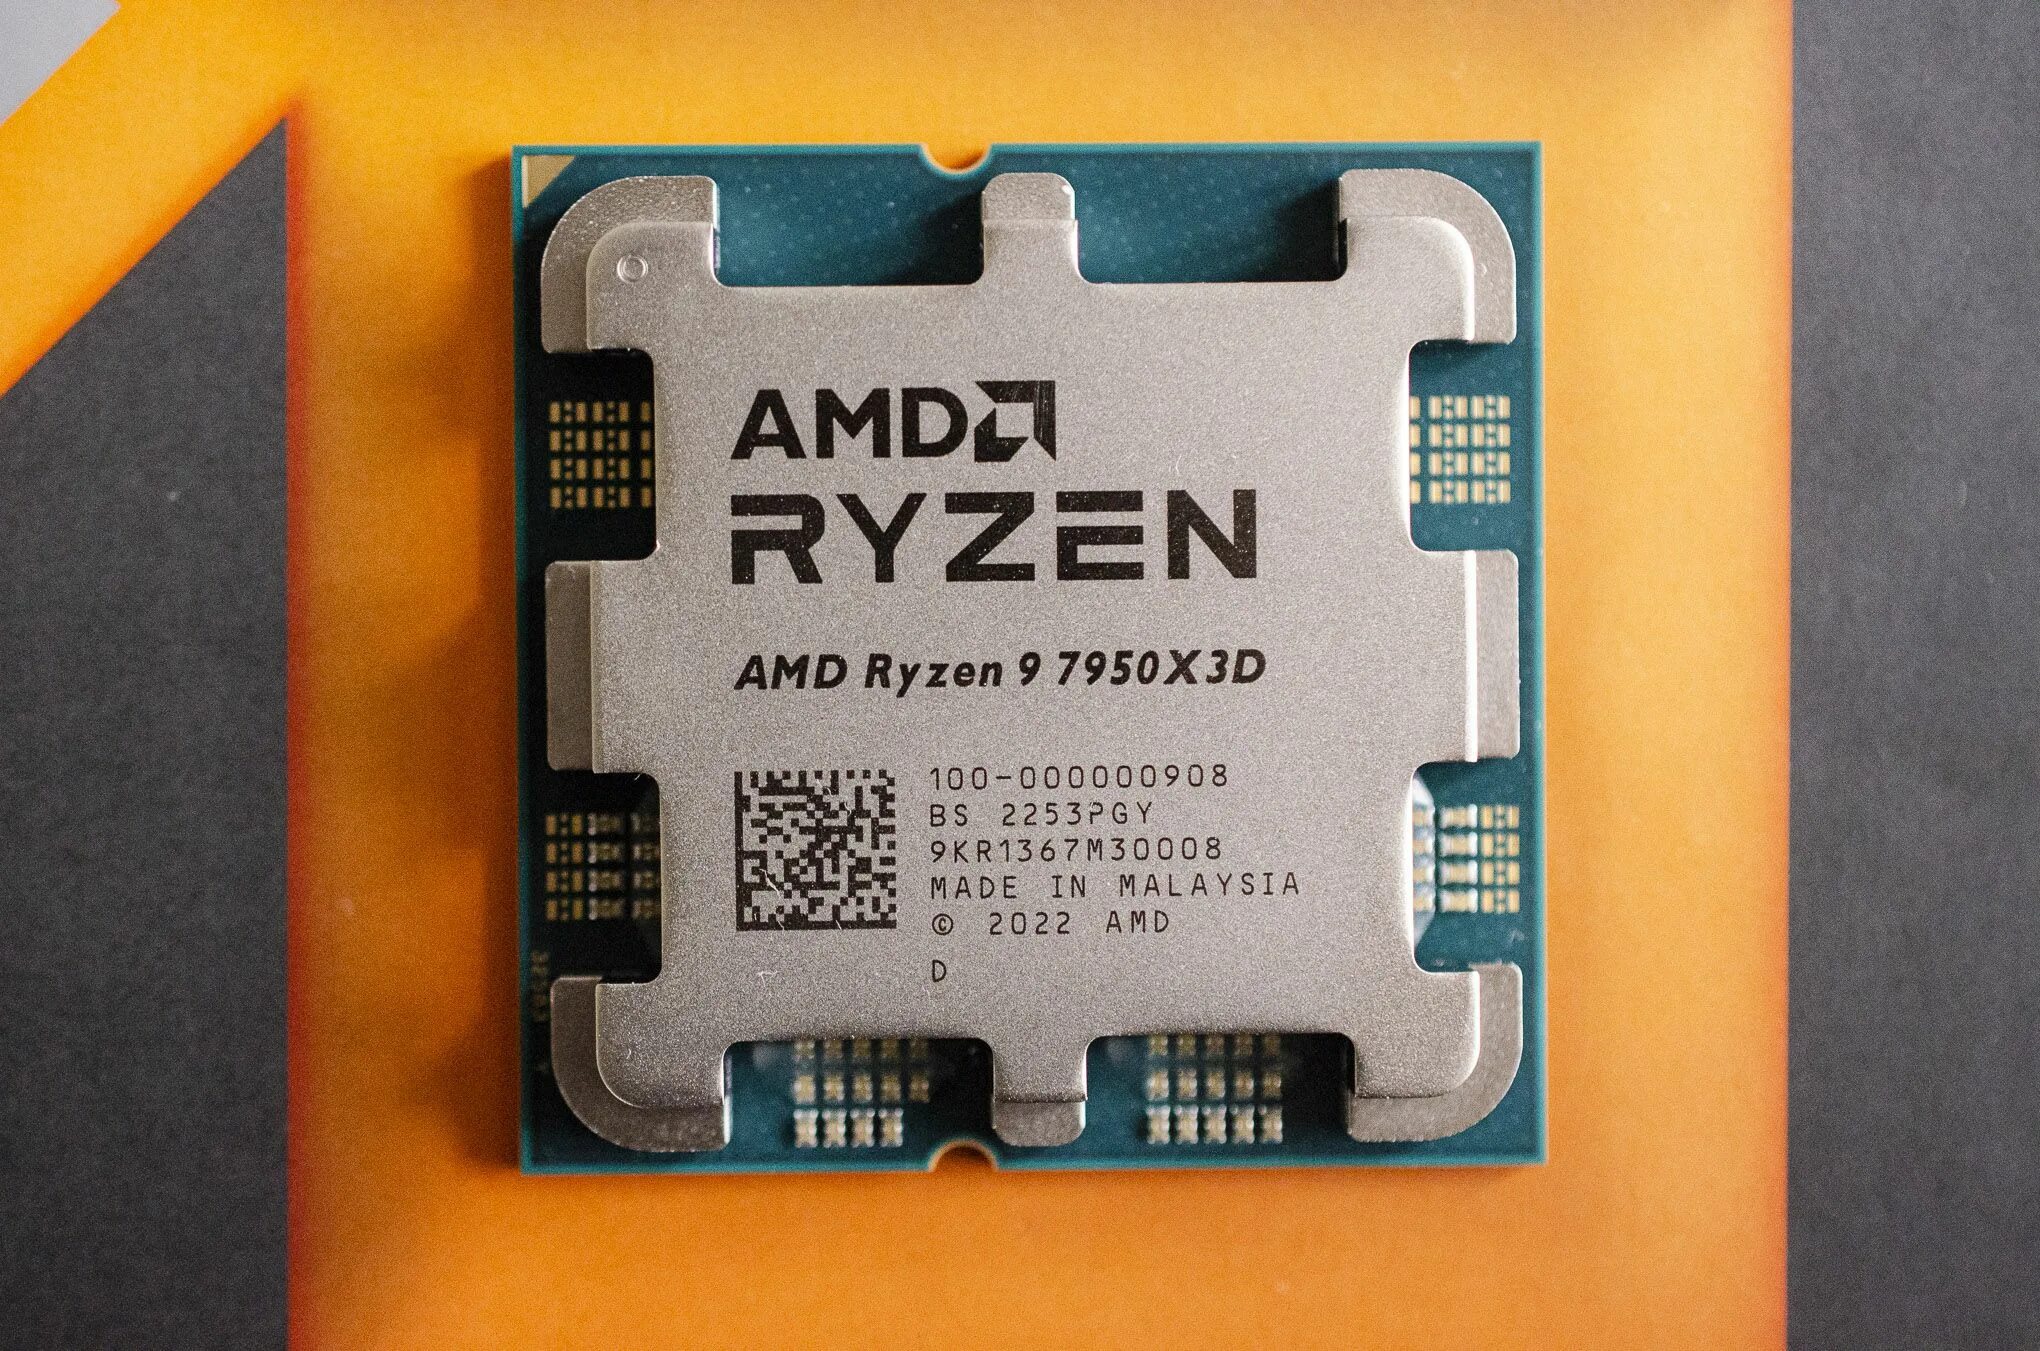 Ryzen i9 7950x. AMD 9 7950. Райзен 9 7950x. 7950x в сокете. Ryzen 7950x.